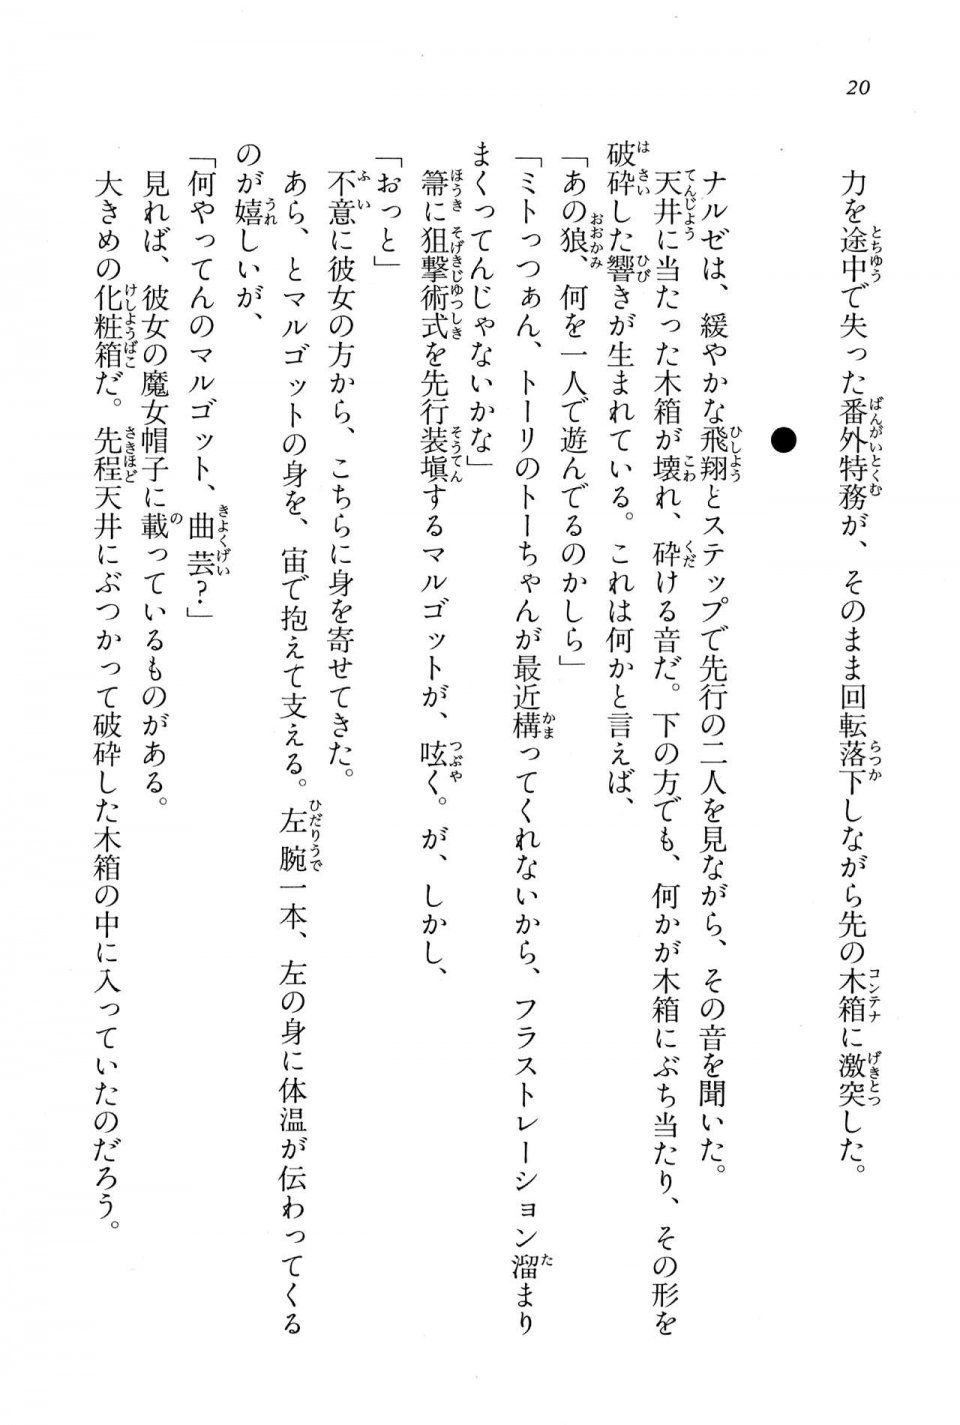 Kyoukai Senjou no Horizon BD Special Mininovel Vol 6(3B) - Photo #24